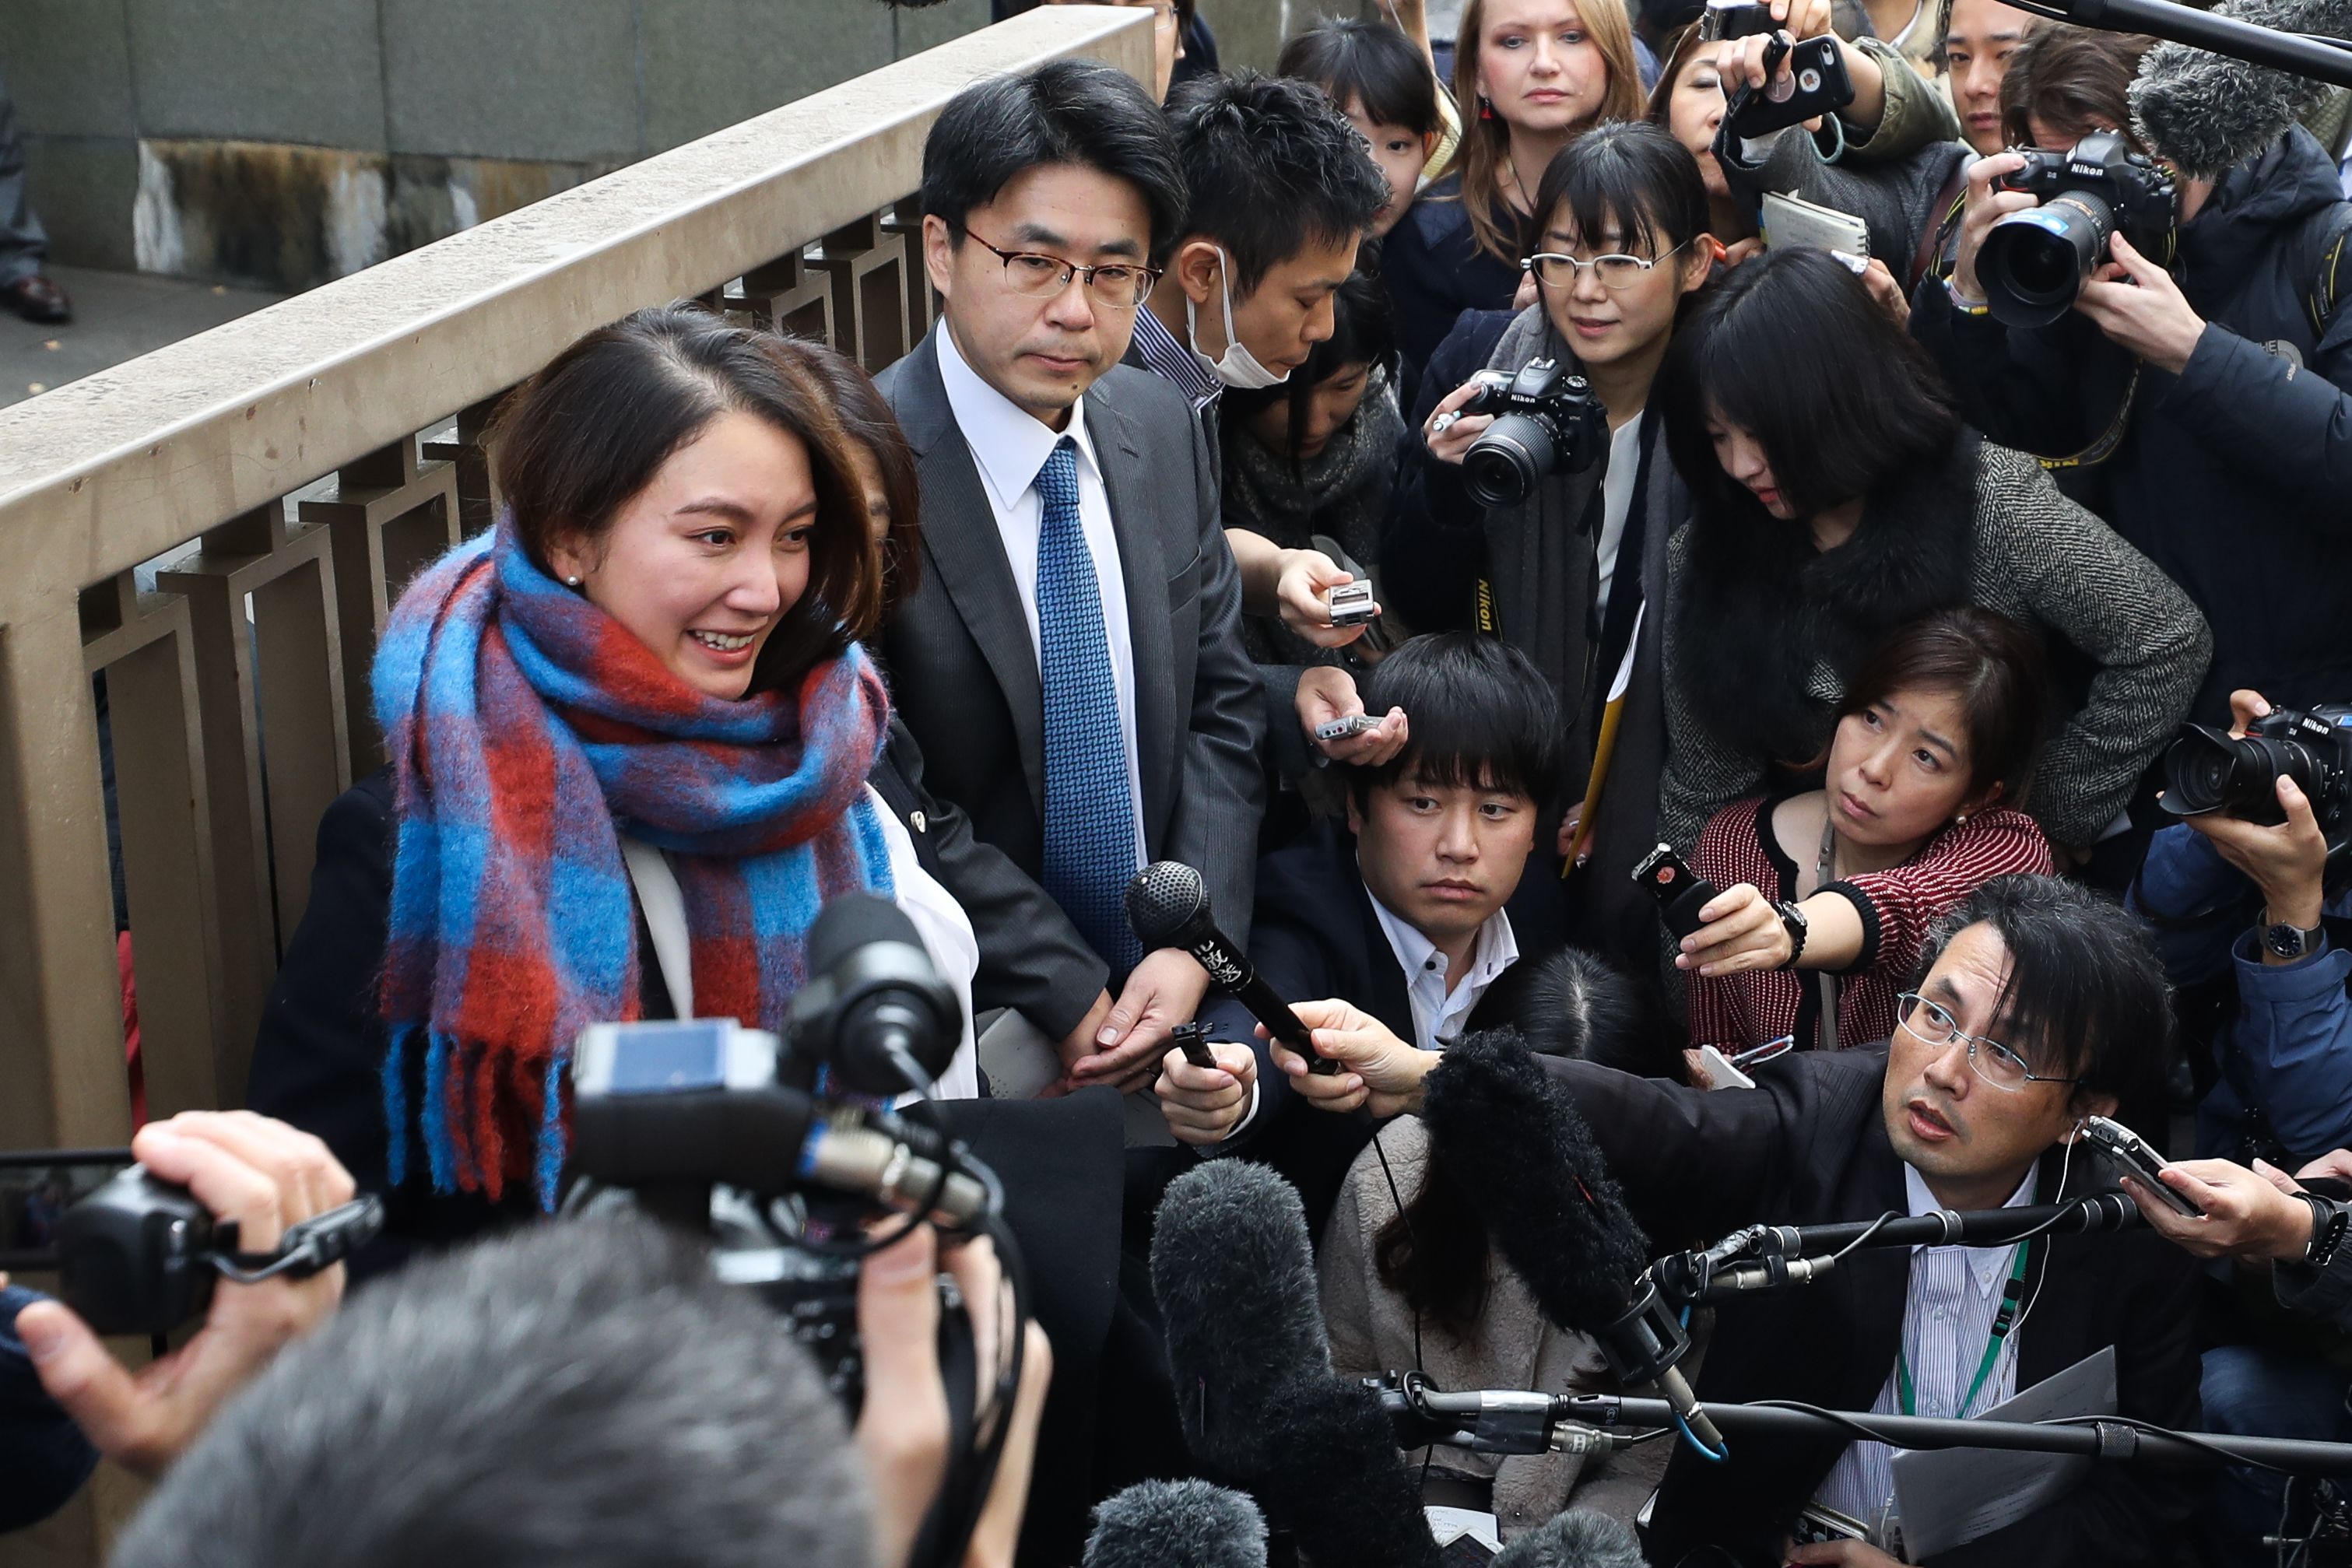 Jabarjasti Reap Hot Sex Live Video - Shiori Ito won civil case against her alleged rapist. But Japan's rape laws  need overhaul, campaigners say | CNN